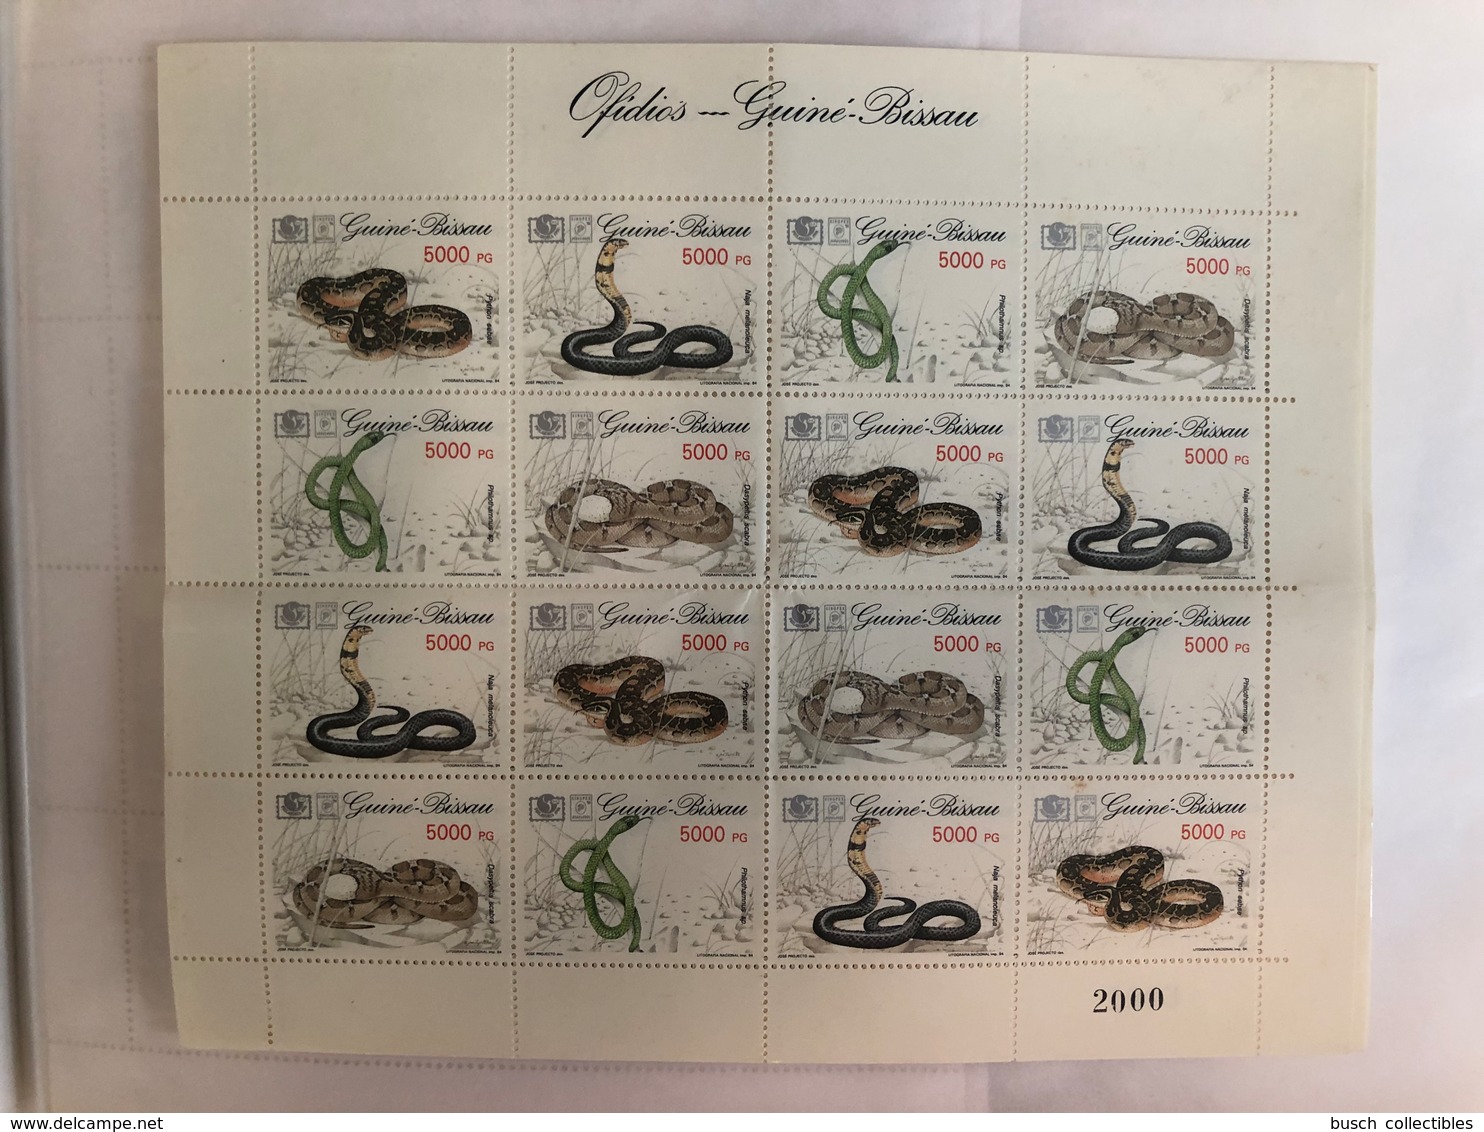 Guiné-Bissau Guinea Guinée 1994 Mi. 1211-1214 Serpents Snakes Schlangen Reptiles Reptilien MNH** - Schlangen